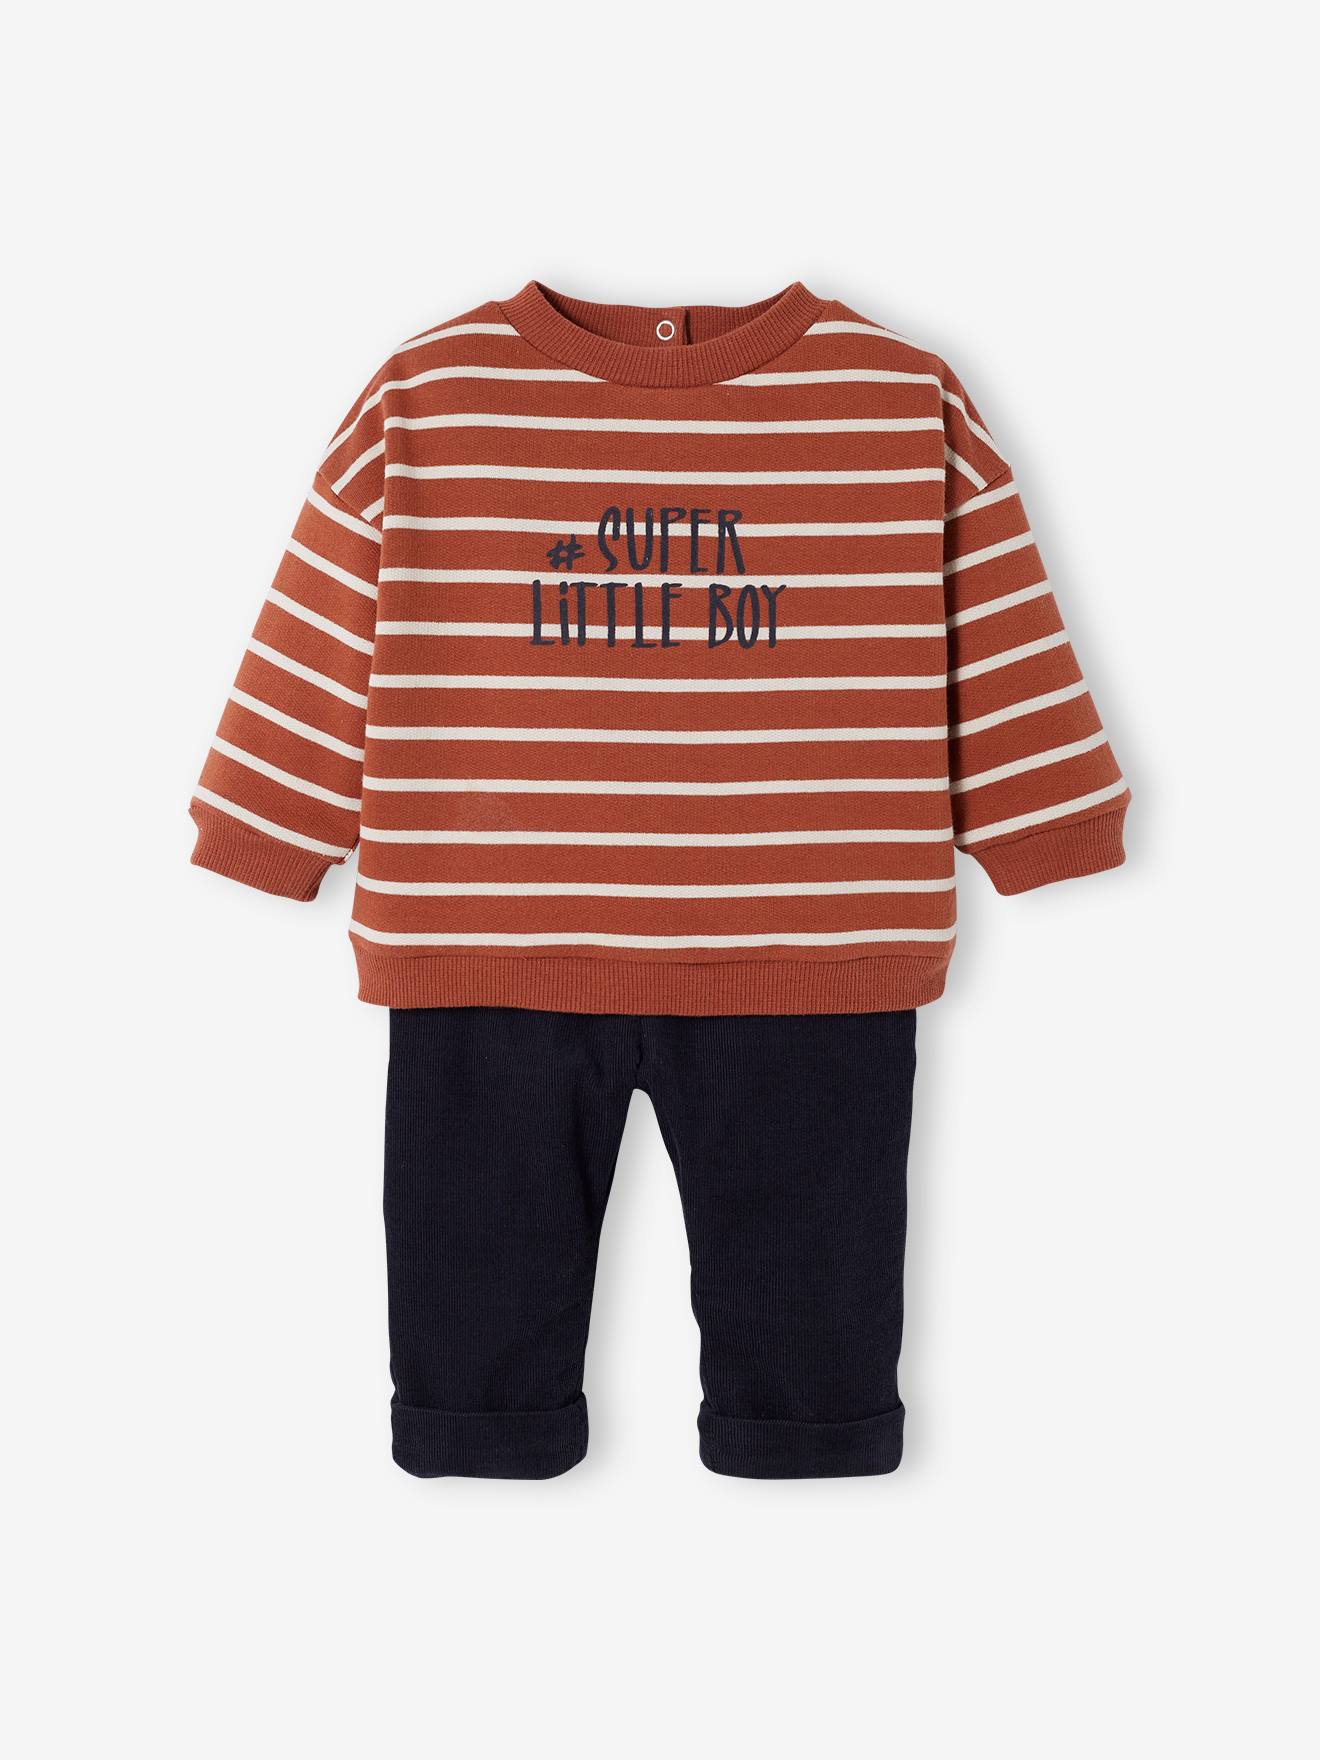 camiseta de jersey fino para bebés Ropa Ropa unisex para niños Ropa unisex para bebé Partes de arriba Camiseta de bebé camiseta de gateo más linda 